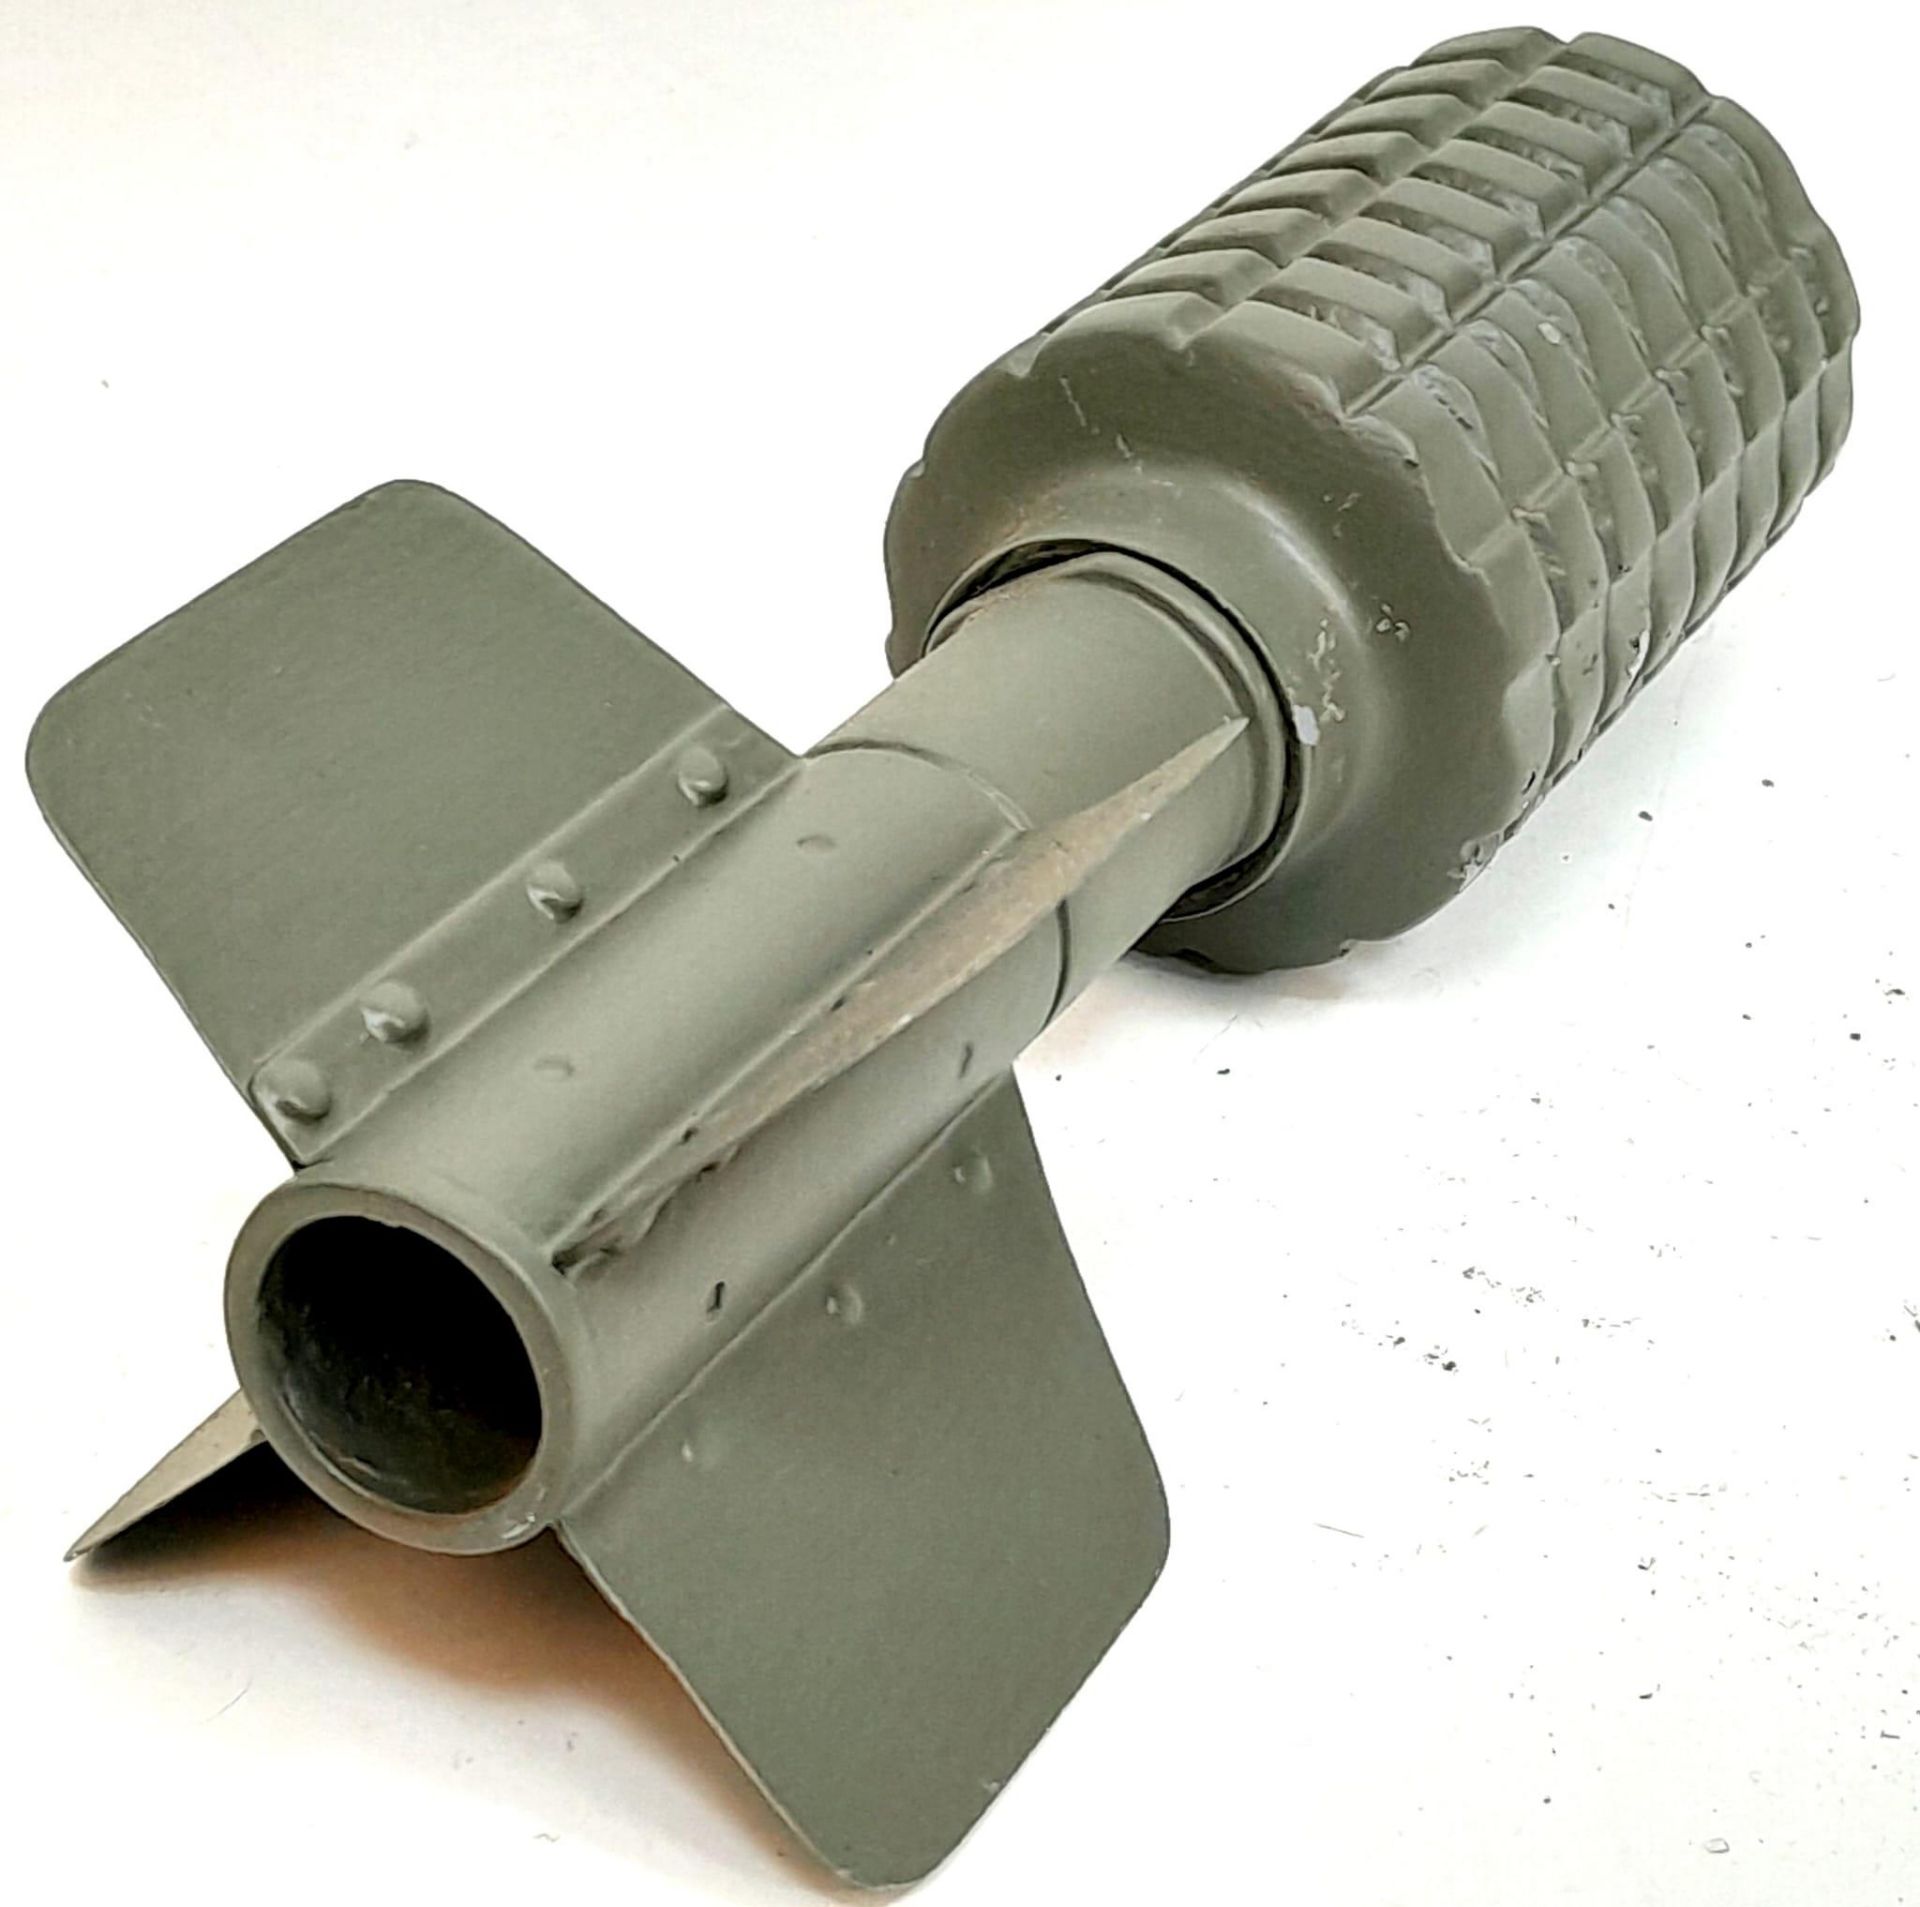 INERT WW1 German Museum Quality Restored Granatenwerfer Spigot Mortar Round. UK Mainland Sales Only. - Image 2 of 3